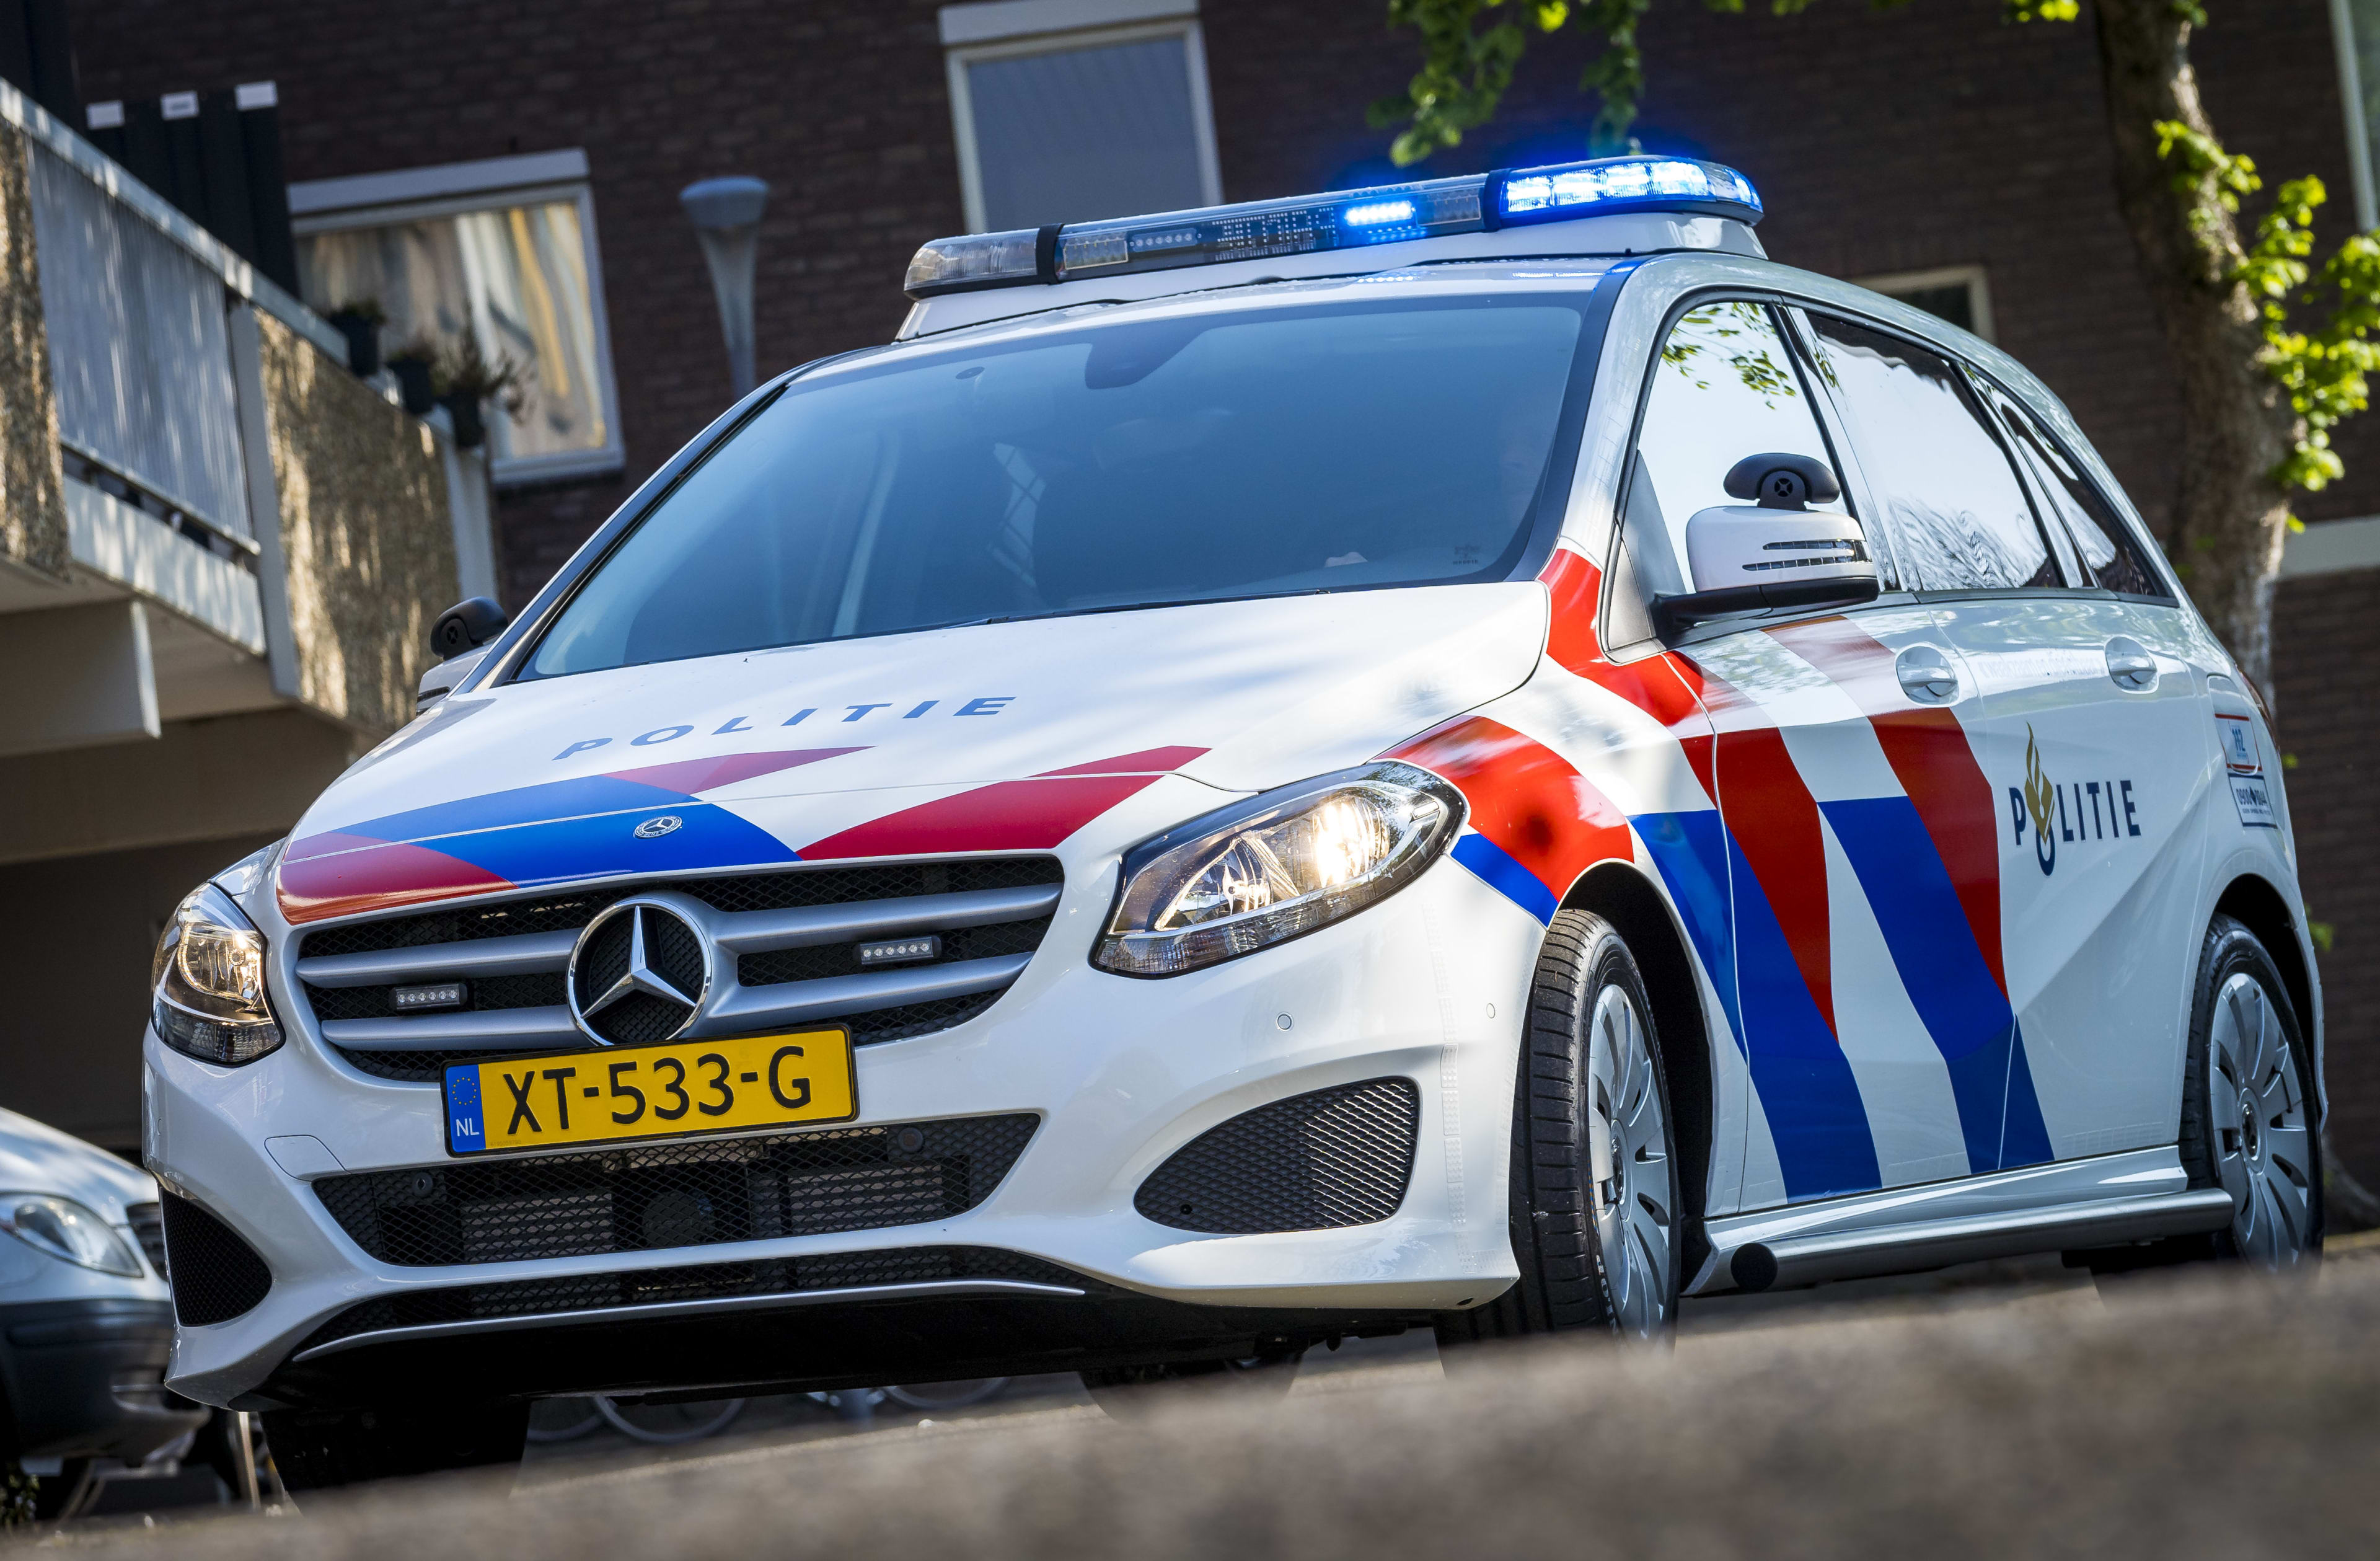 Automobilist (23) uit Heemstede rijdt met slok op frontaal op hoekpunt vangrails A9